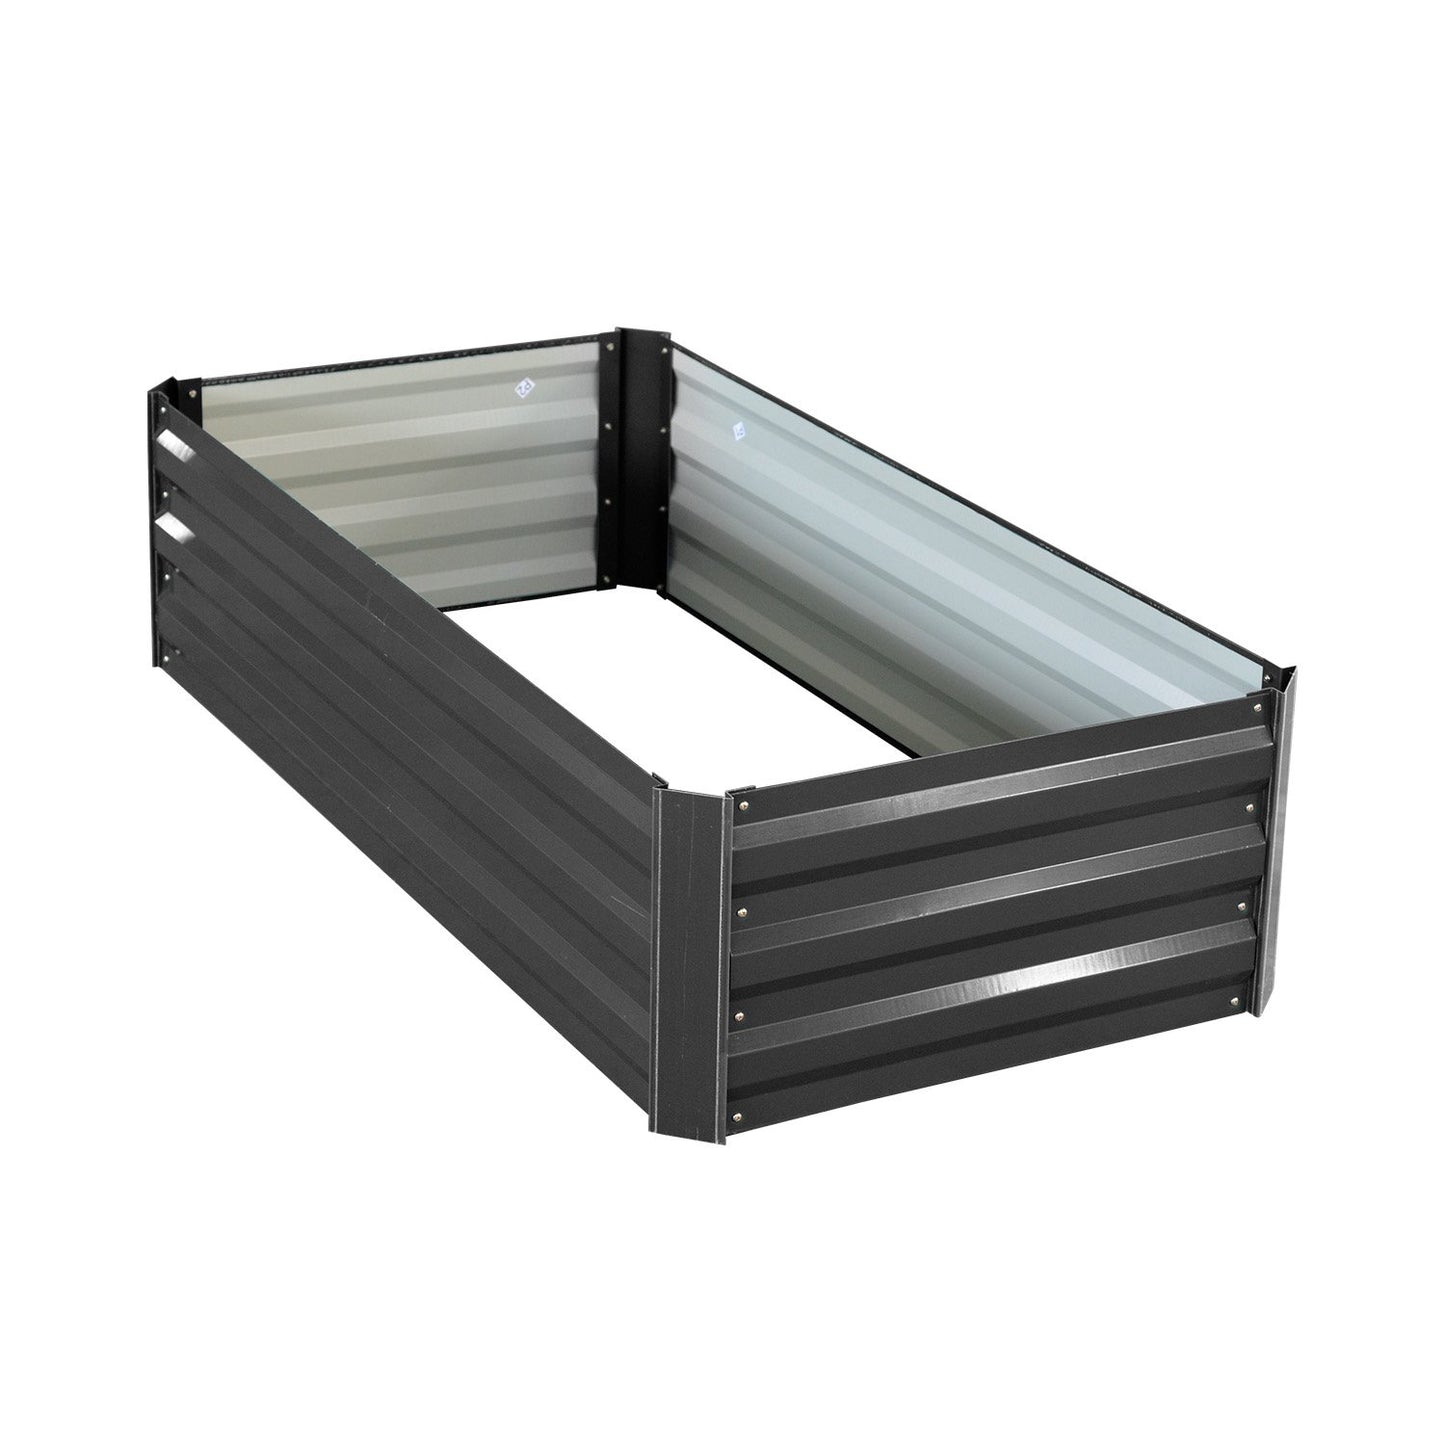 Wallaroo Garden Bed 120 x 60 x 30cm Galvanized Steel - Black